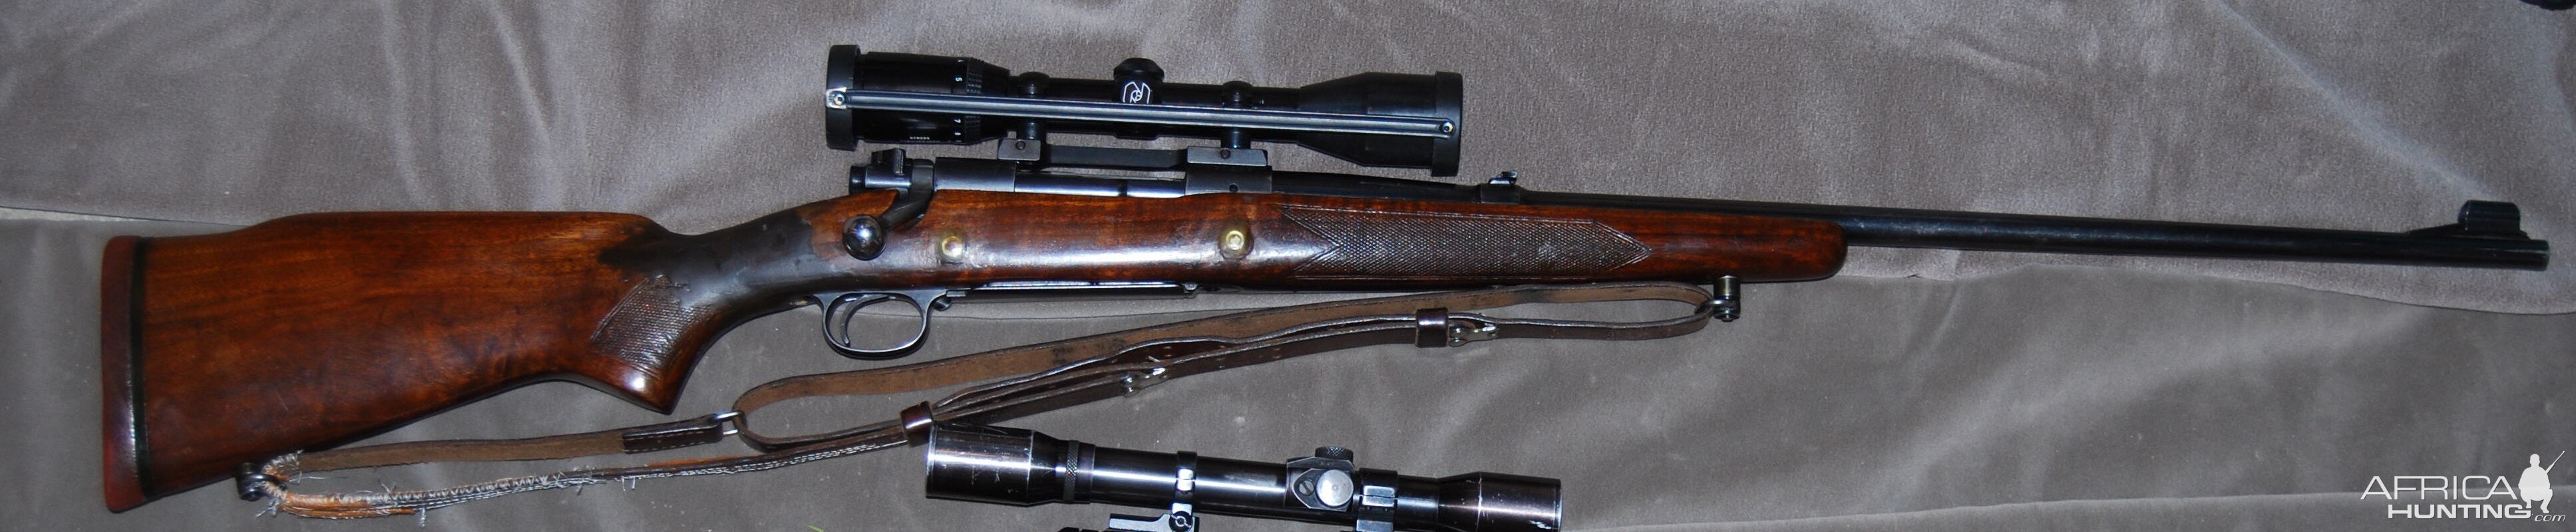 1960 Winchester M 70 Alaskan 338 Mag Rifle